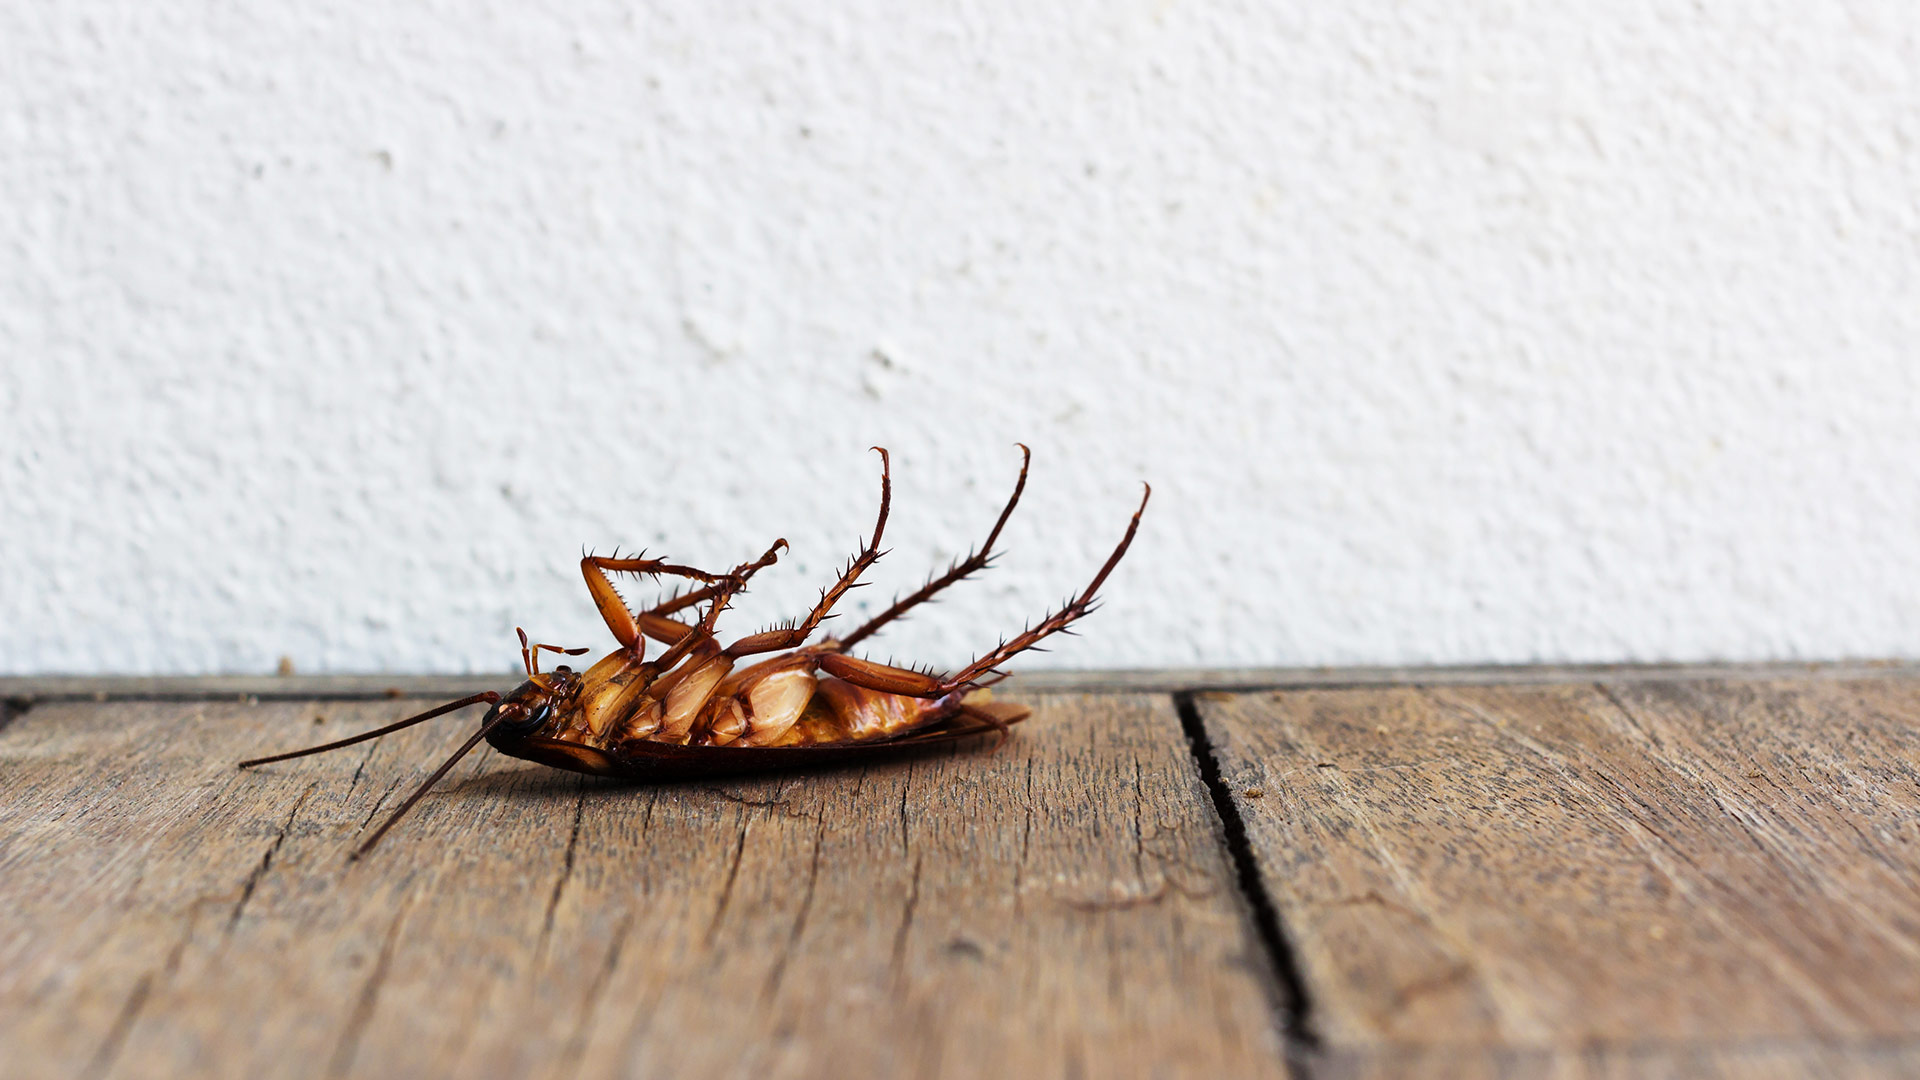 Dead cockroach on its back near Mansfield, OH.